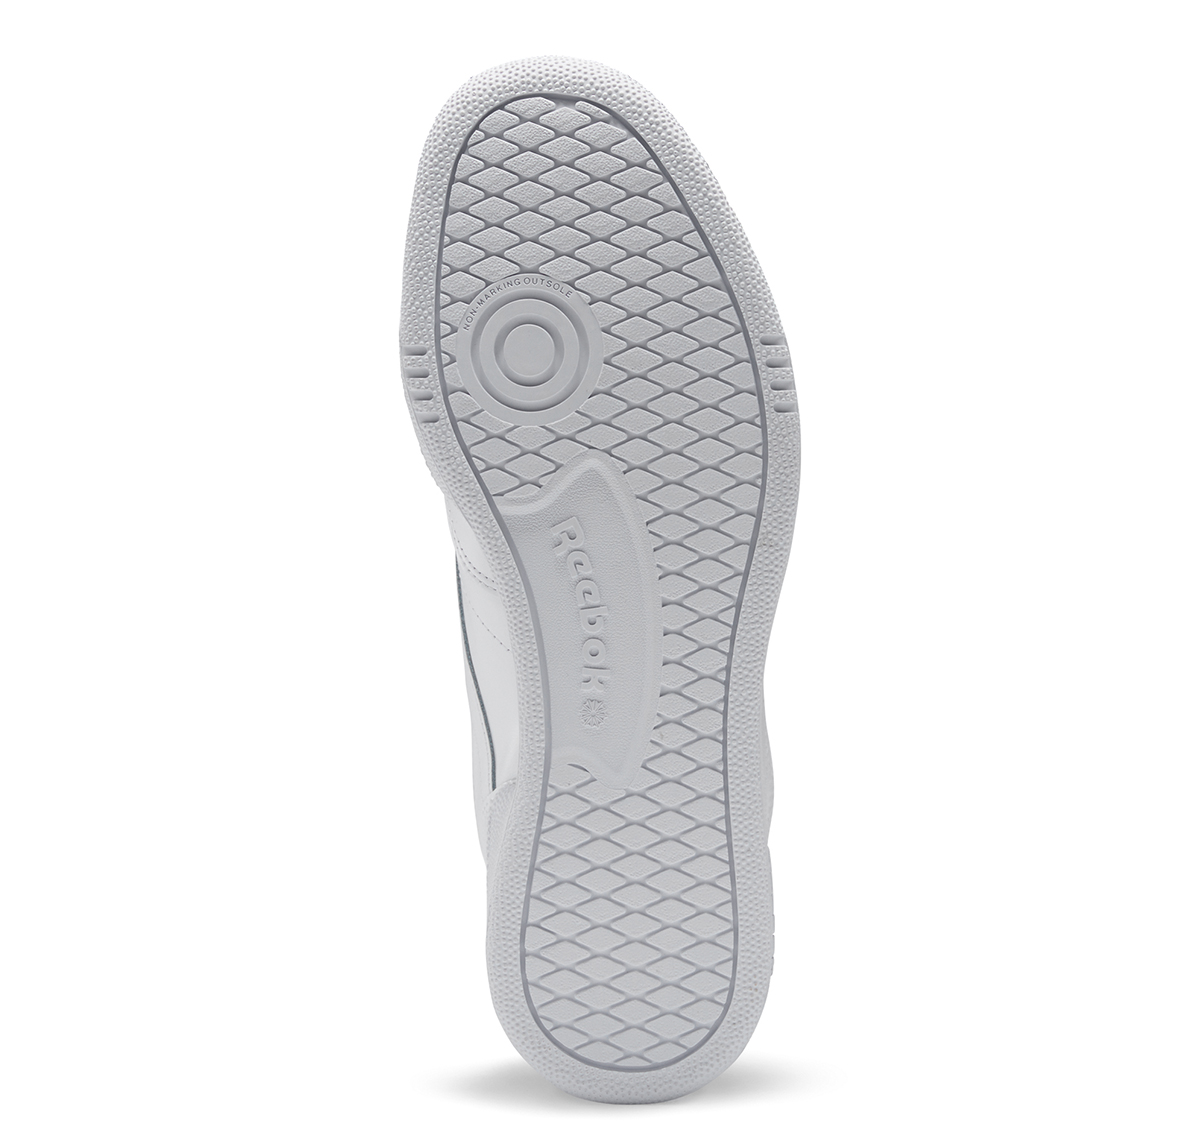 Reebok Club C Mid II - White Grey sole